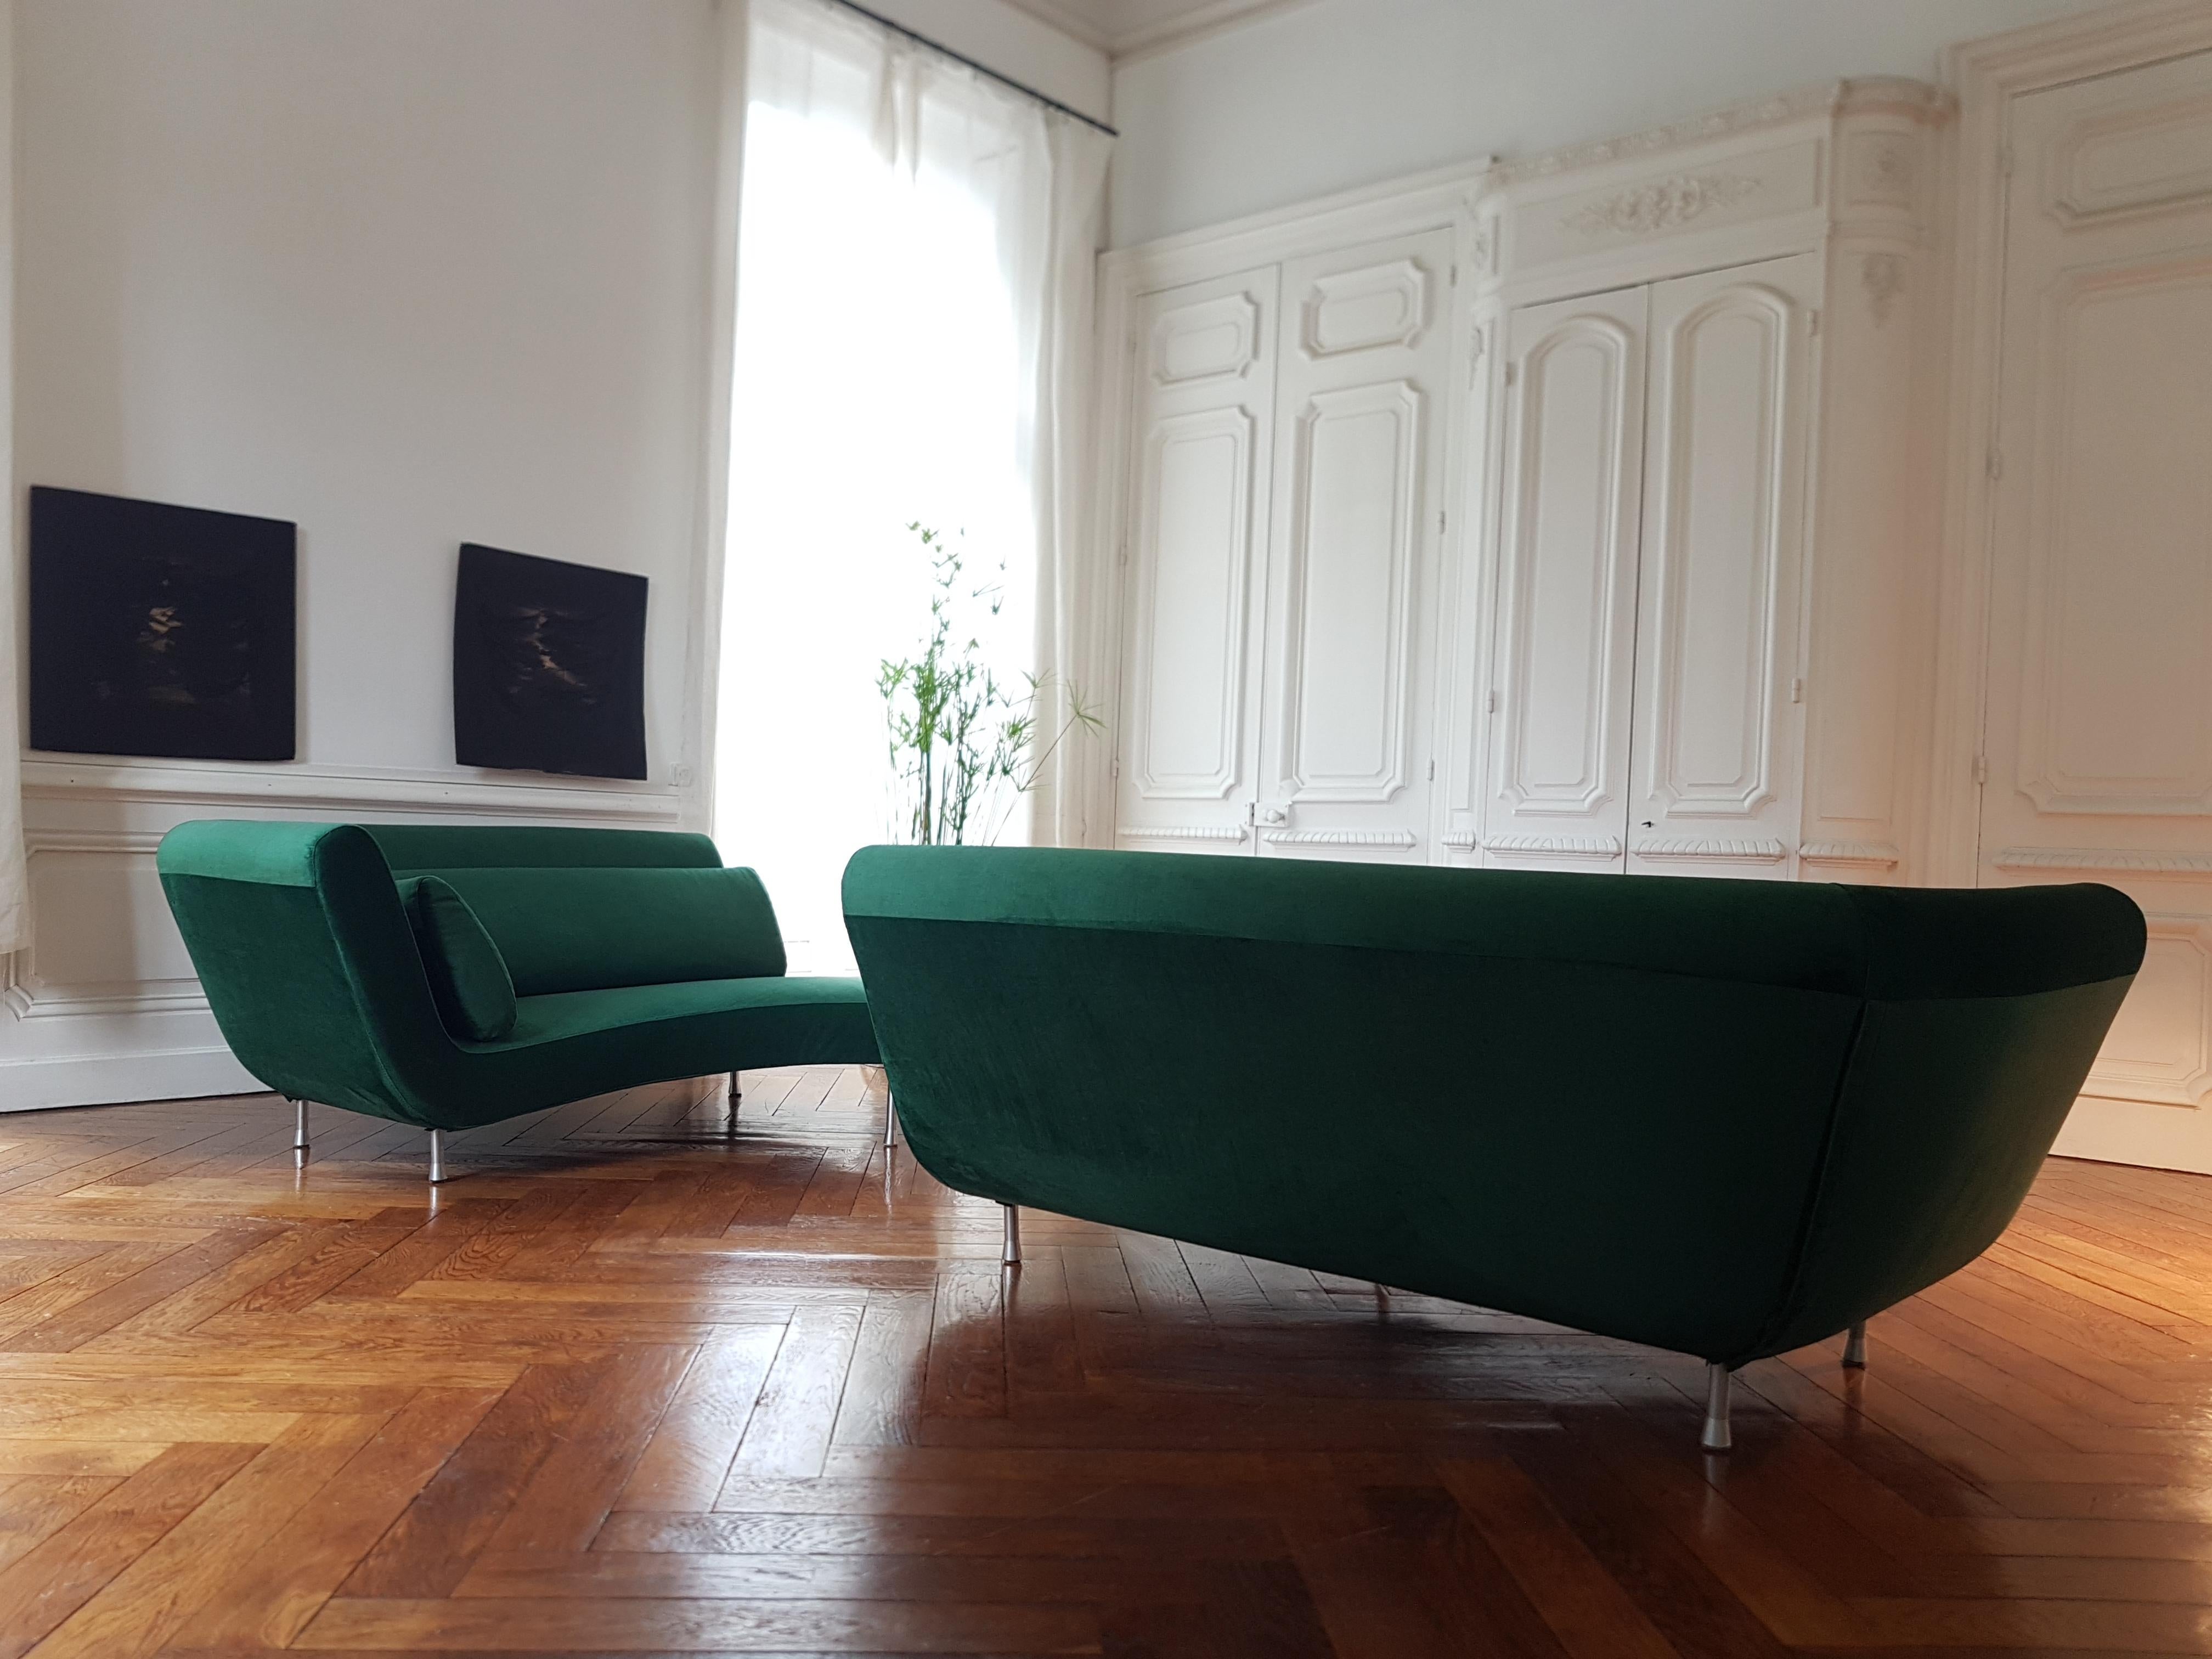 corner sofa design